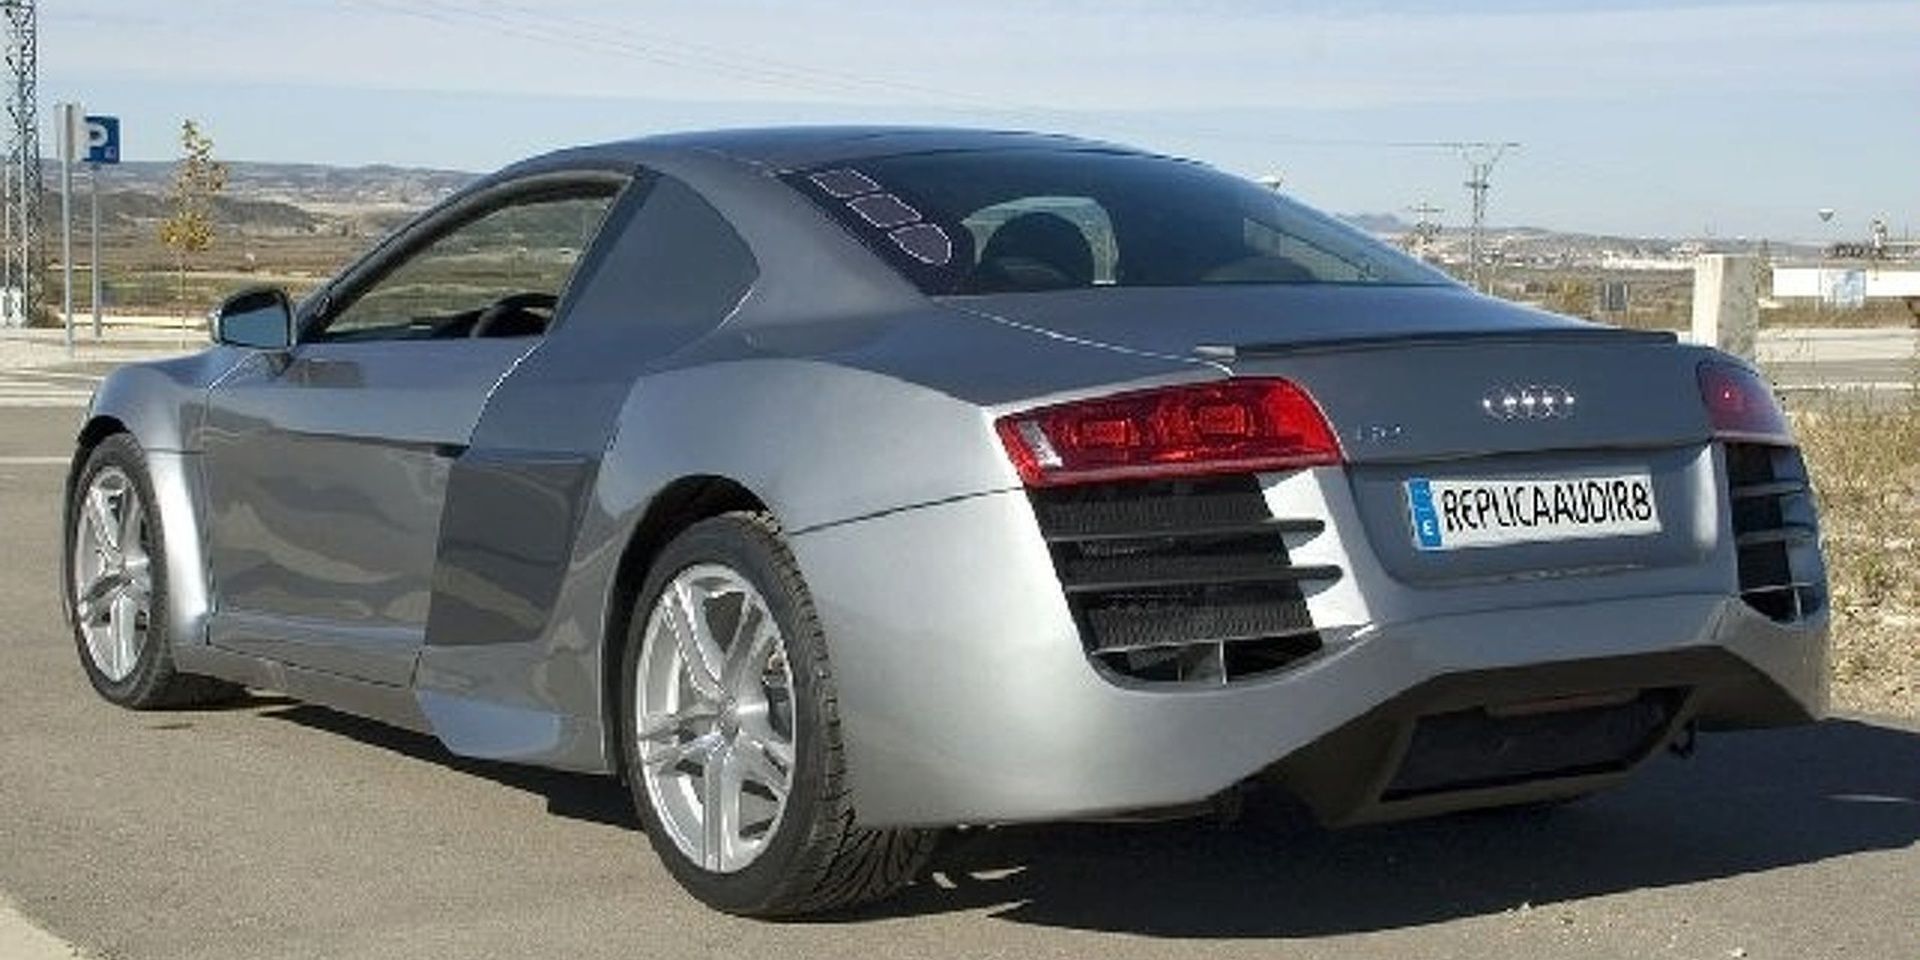 Audi cougar rear replica